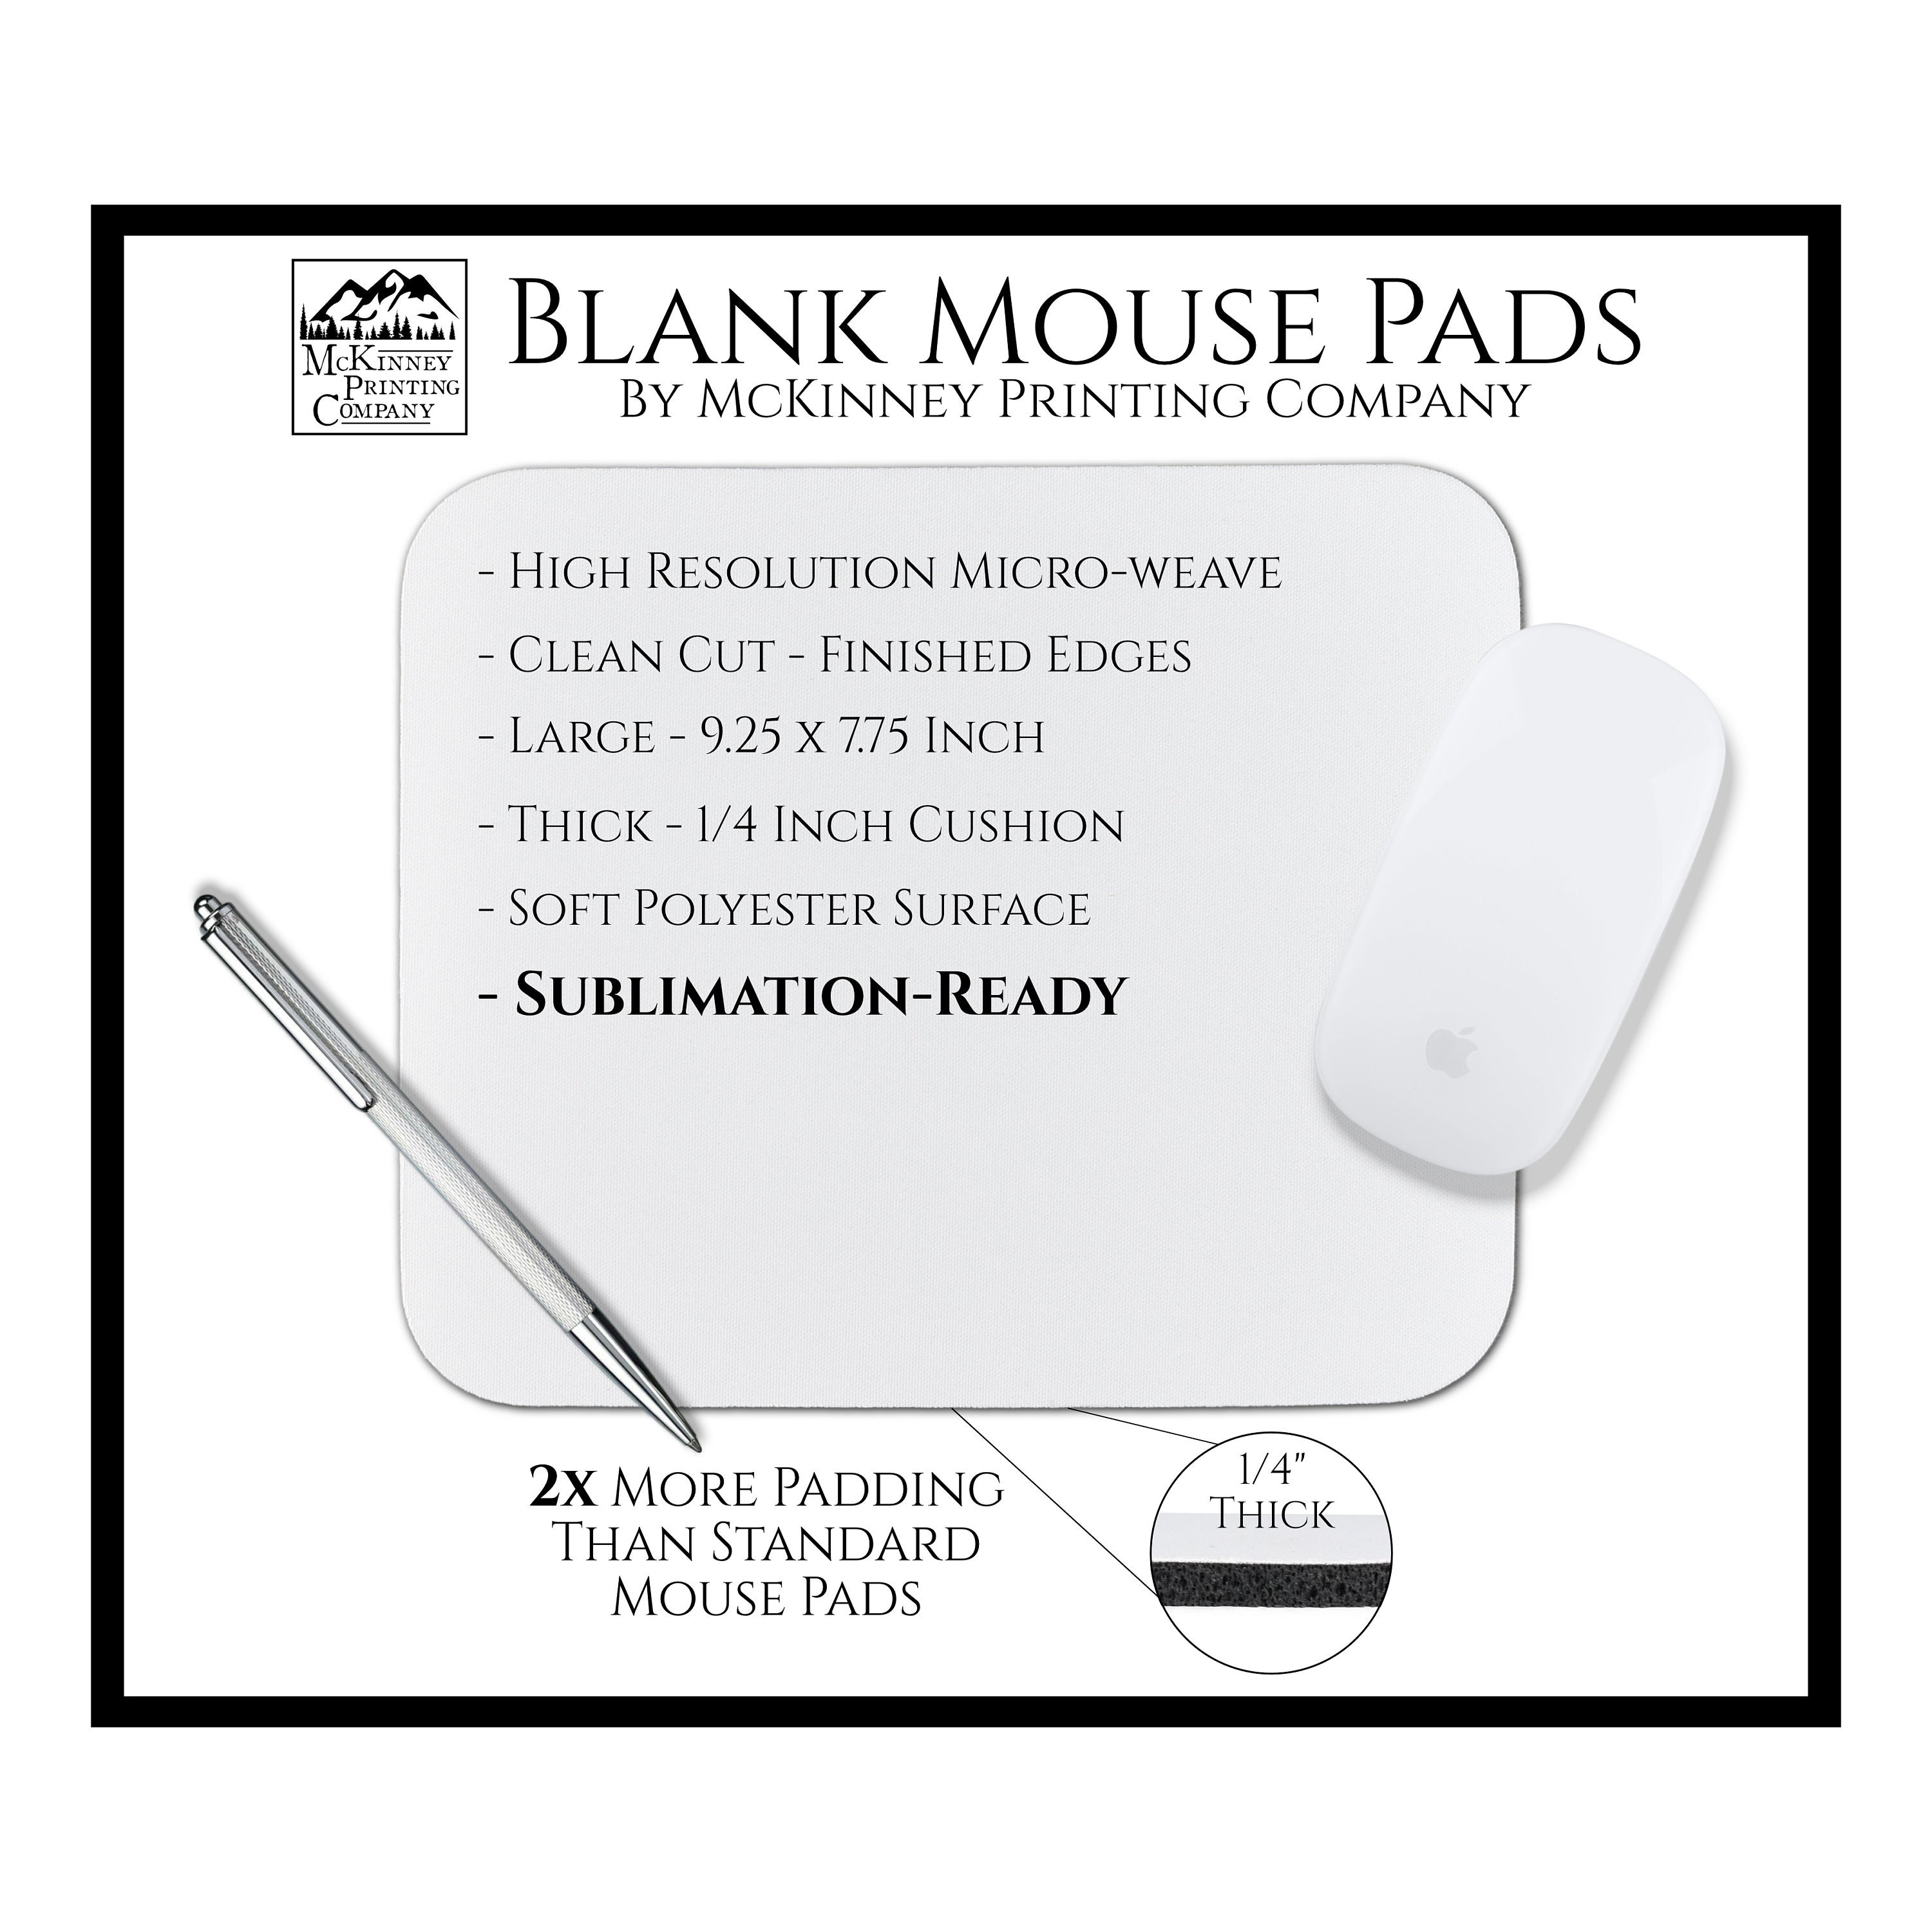 Sublimation Blank 9.4 X 7.9 WHITE Anti-slip Gaming Mouse Pad, Computer  Mouse Pad, Mouse Mat, Mousepad Blank, Heat Transfer Printing Fabric 